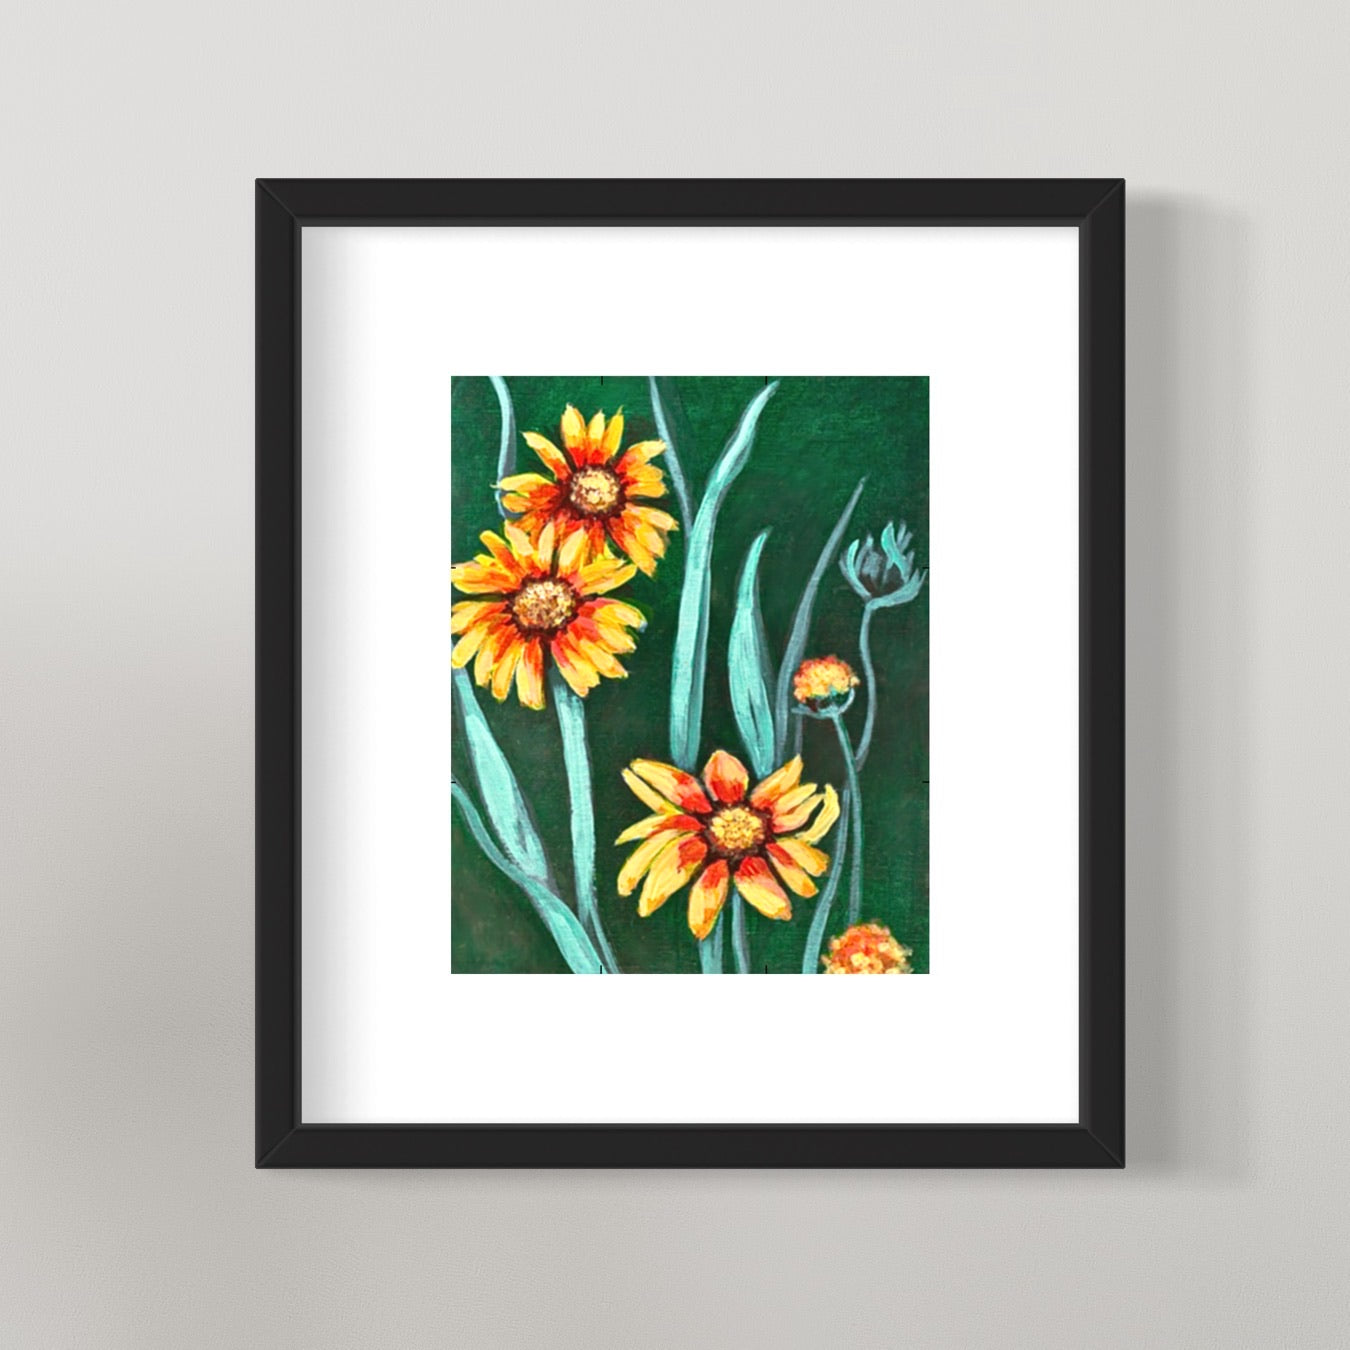 photo of framed Golden Spring Flowers painting